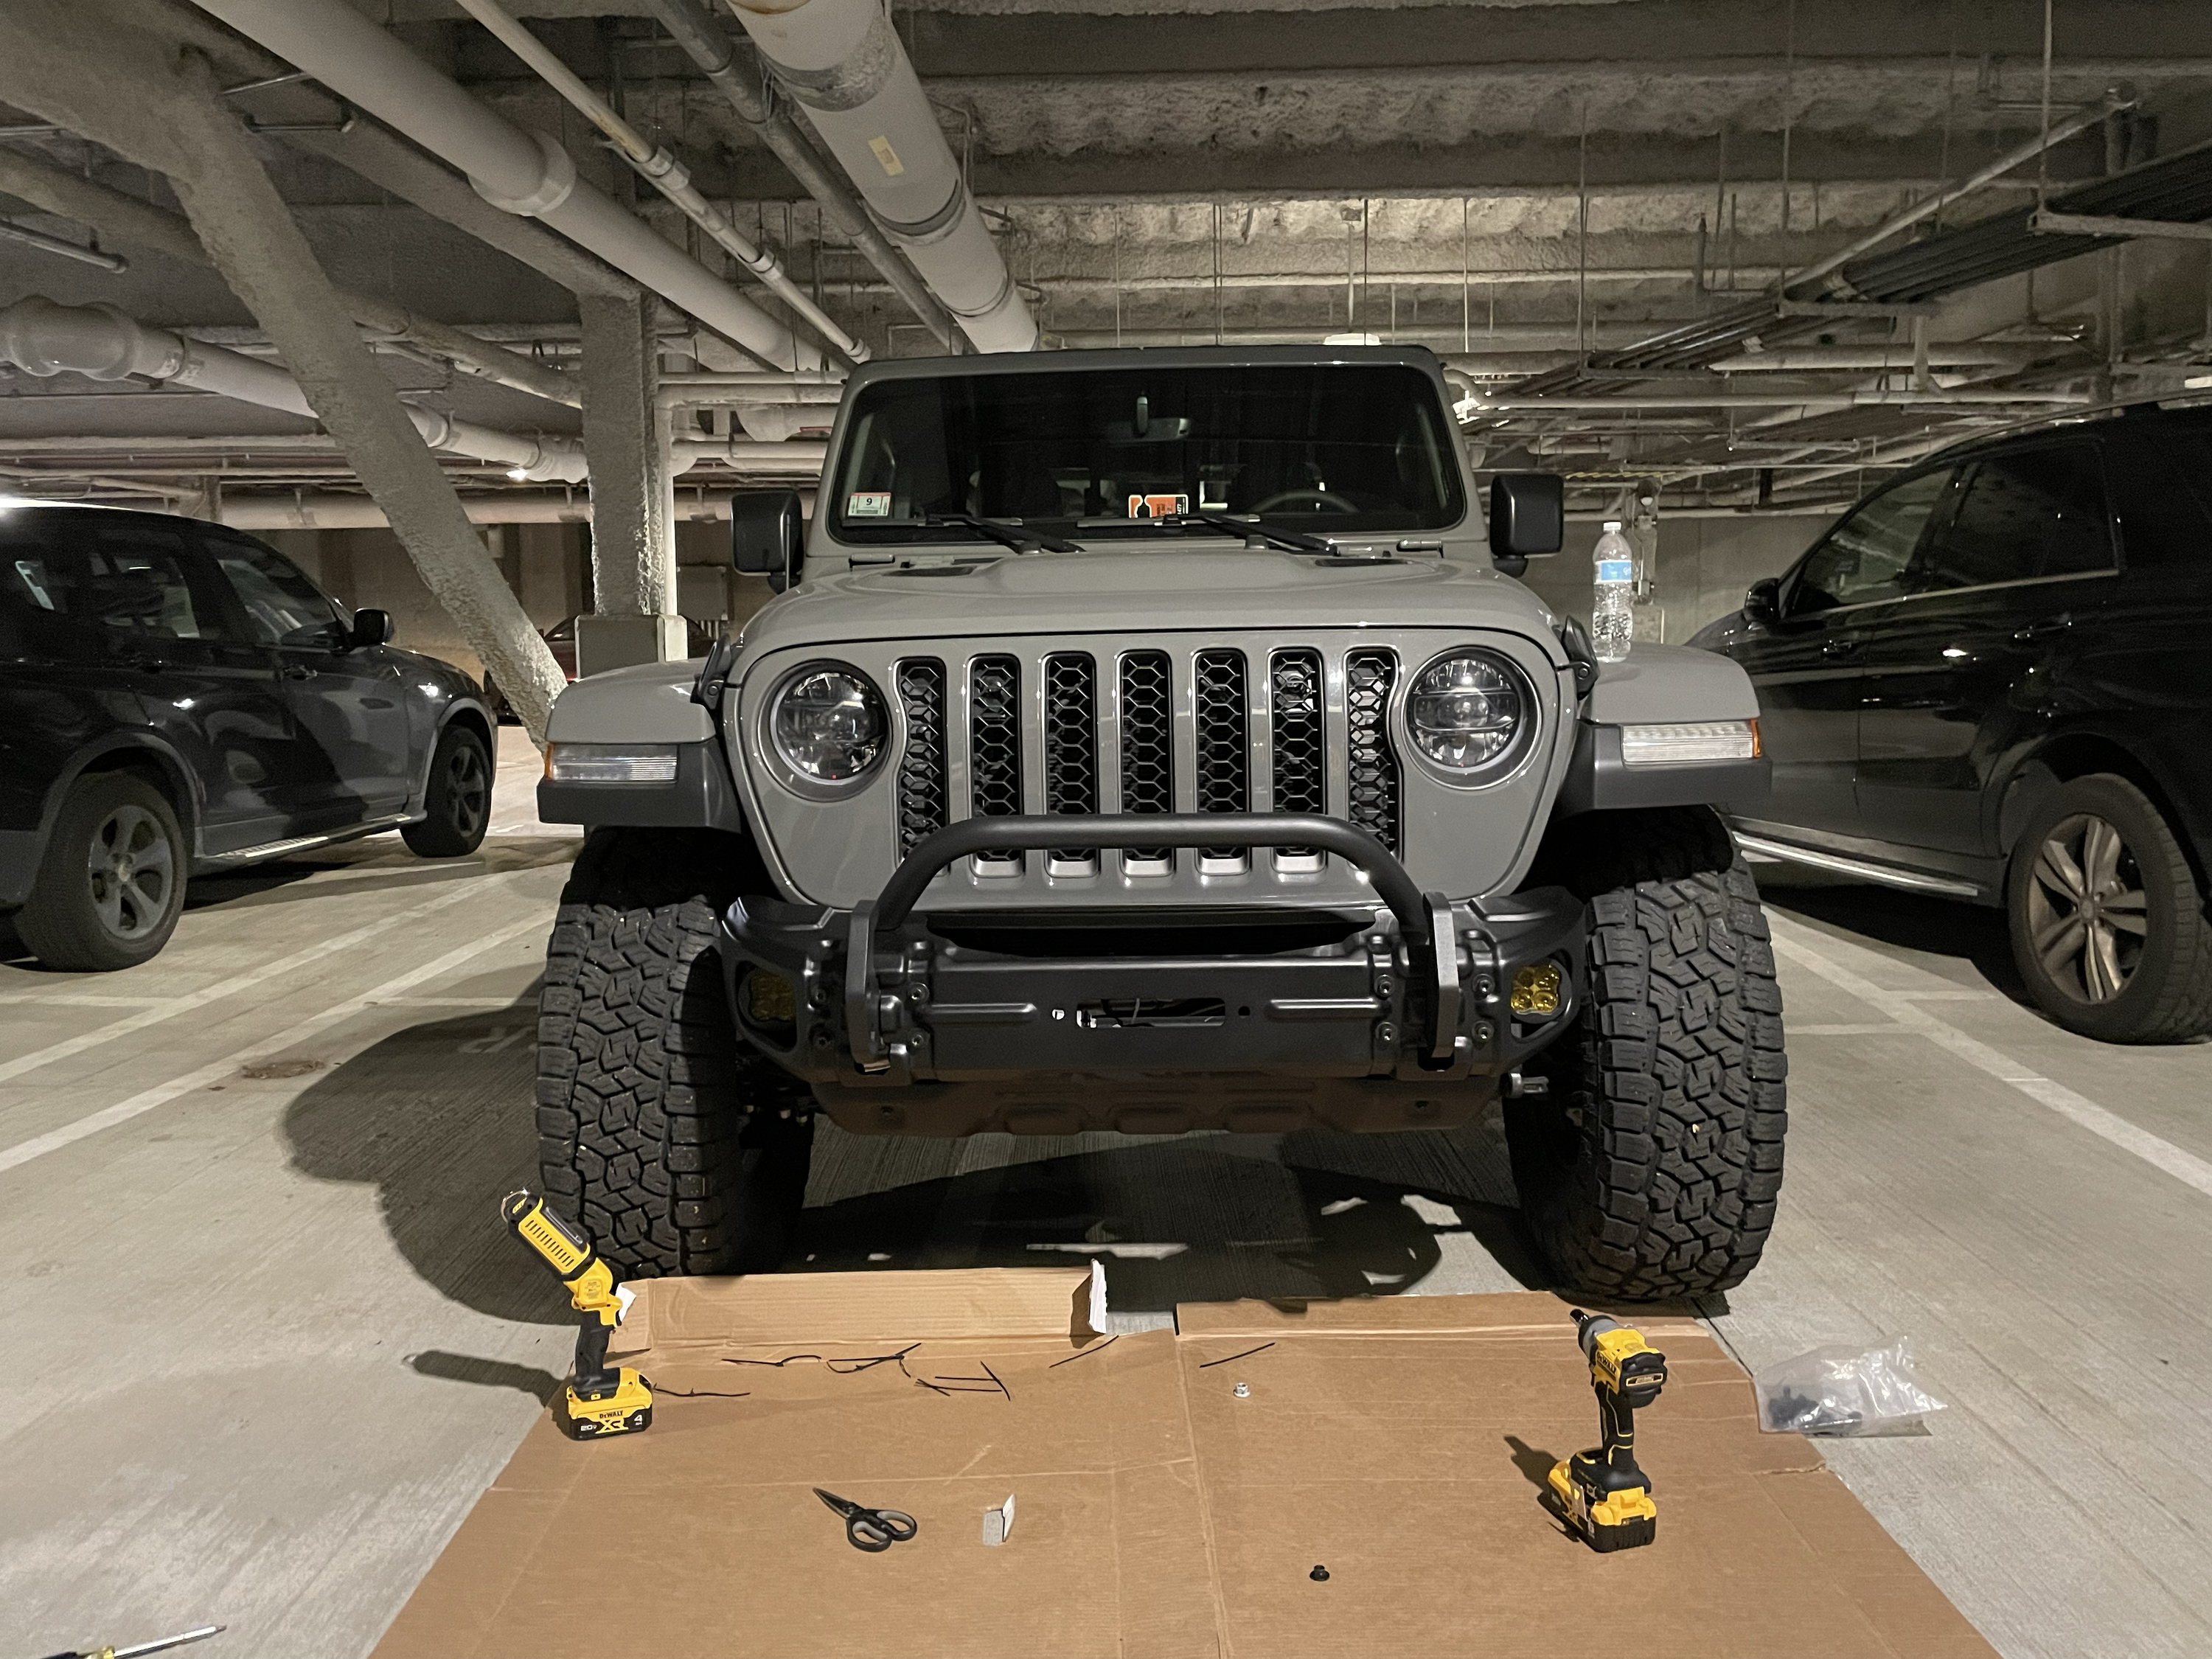 Jeep Gladiator 99% 𝗡𝗲𝘄 𝗥𝘂𝗴𝗴𝗲𝗱 𝗥𝗶𝗱𝗴𝗲 𝗔𝗿𝗰𝘂𝘀 𝗕𝘂𝗺𝗽𝗲𝗿. 𝗕𝗼𝘀𝘁𝗼𝗻 𝗮𝗿𝗲𝗮 𝗽𝗶𝗰𝗸 𝘂𝗽. tempImagedFifT3